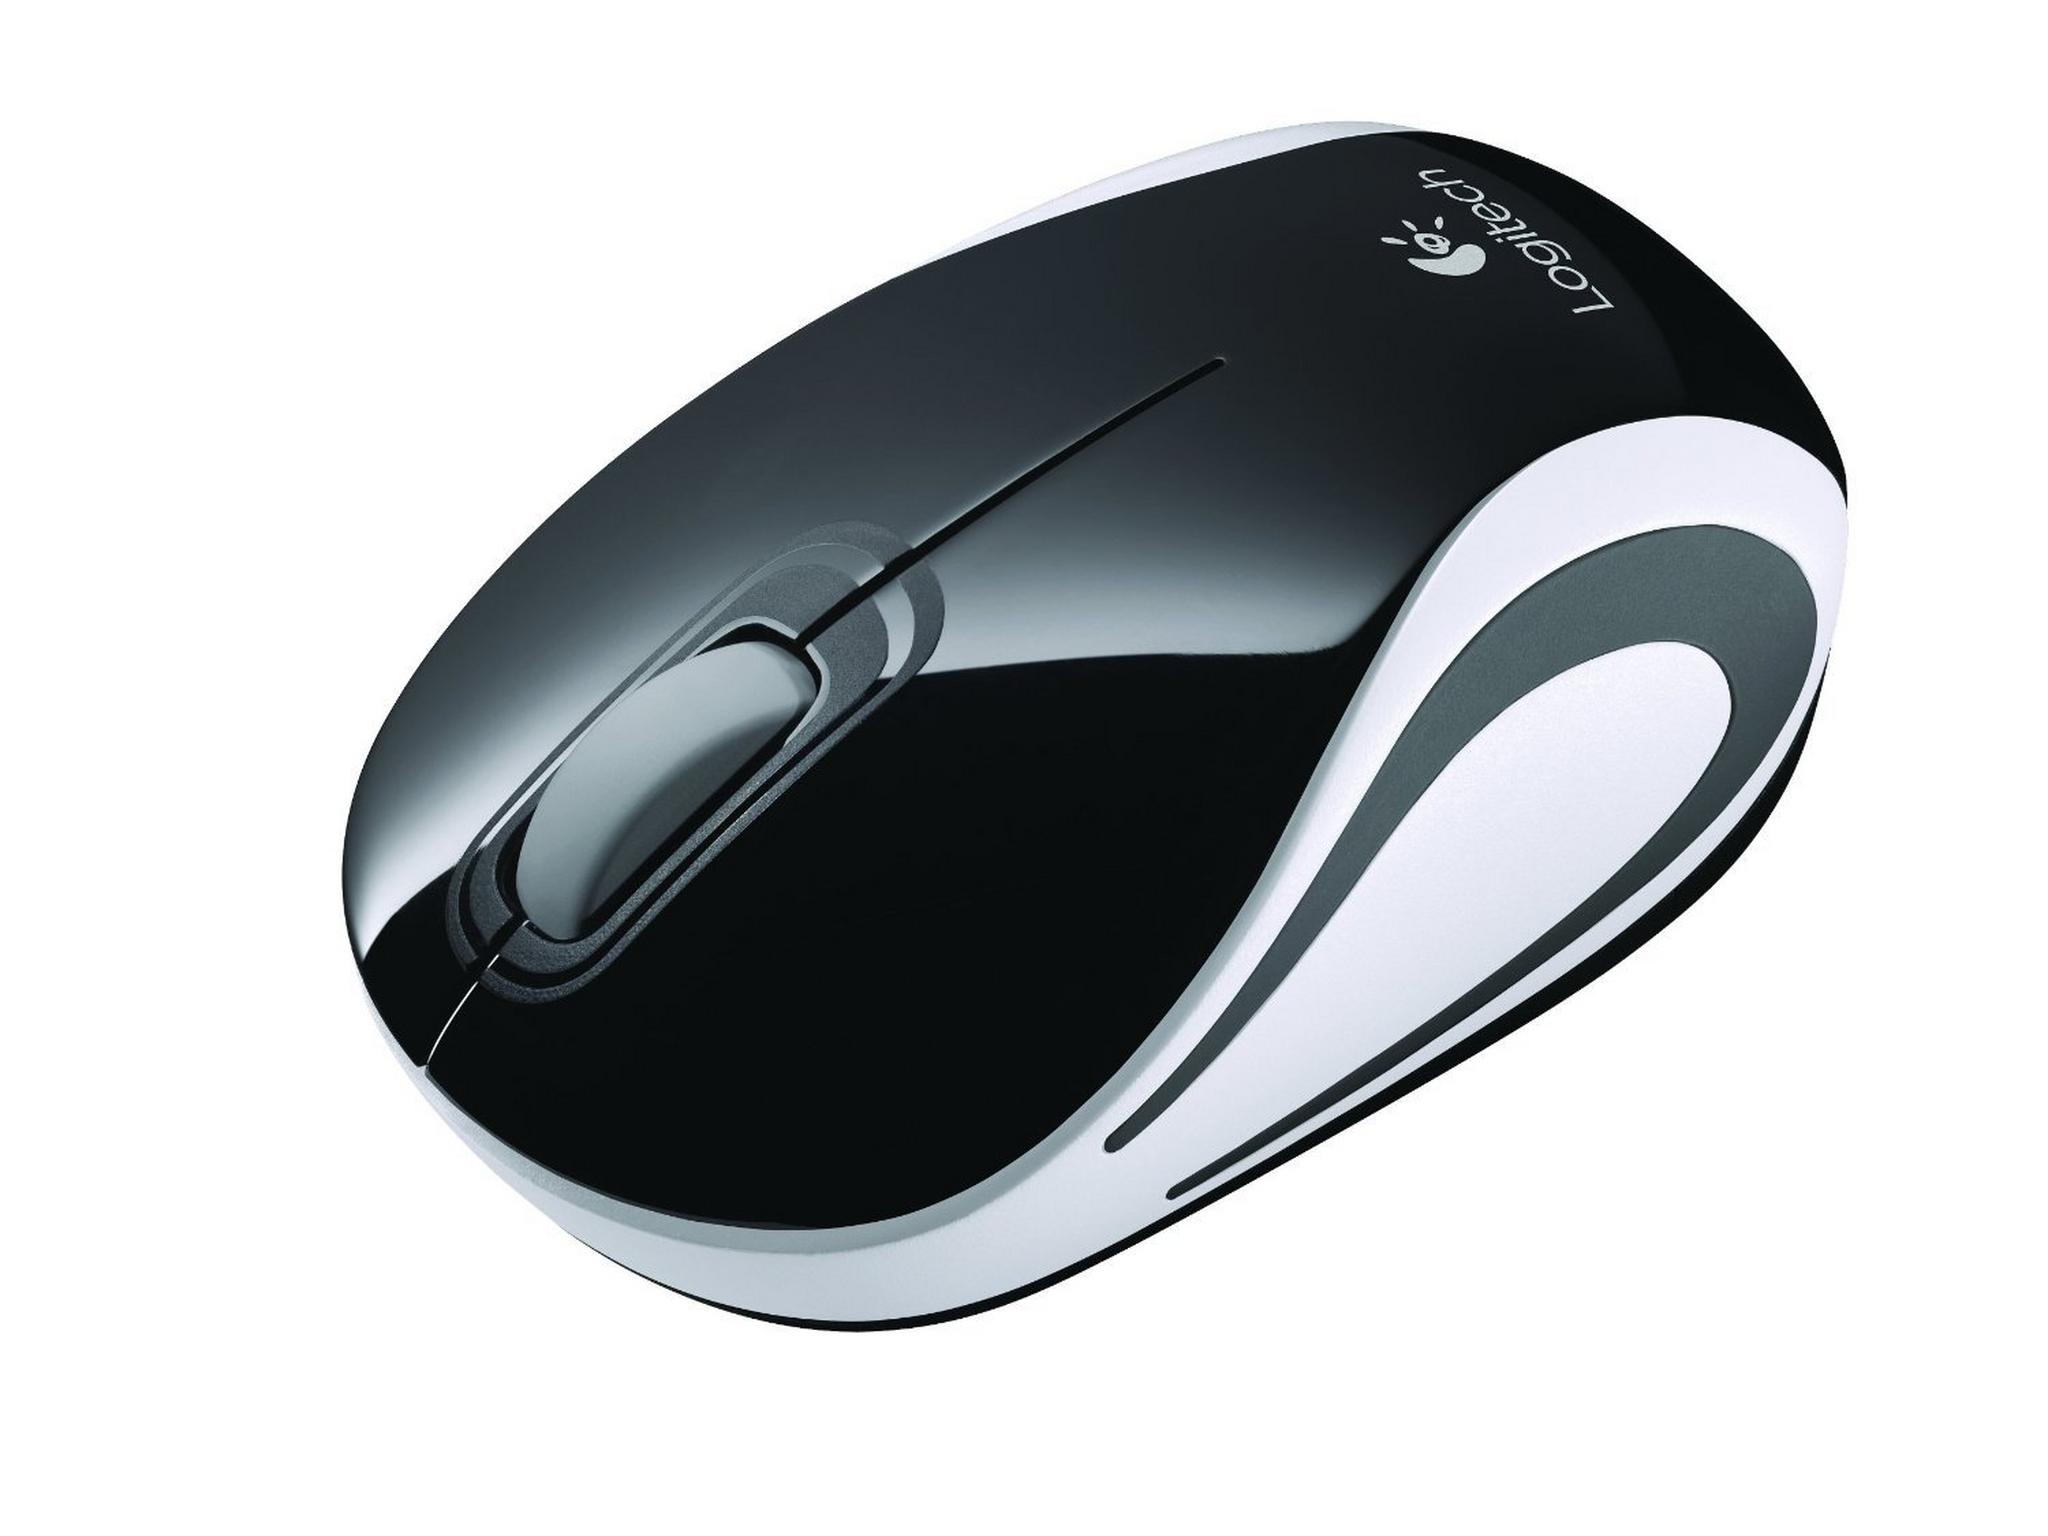 Logitech M187 Mini Wireless Mouse - Black